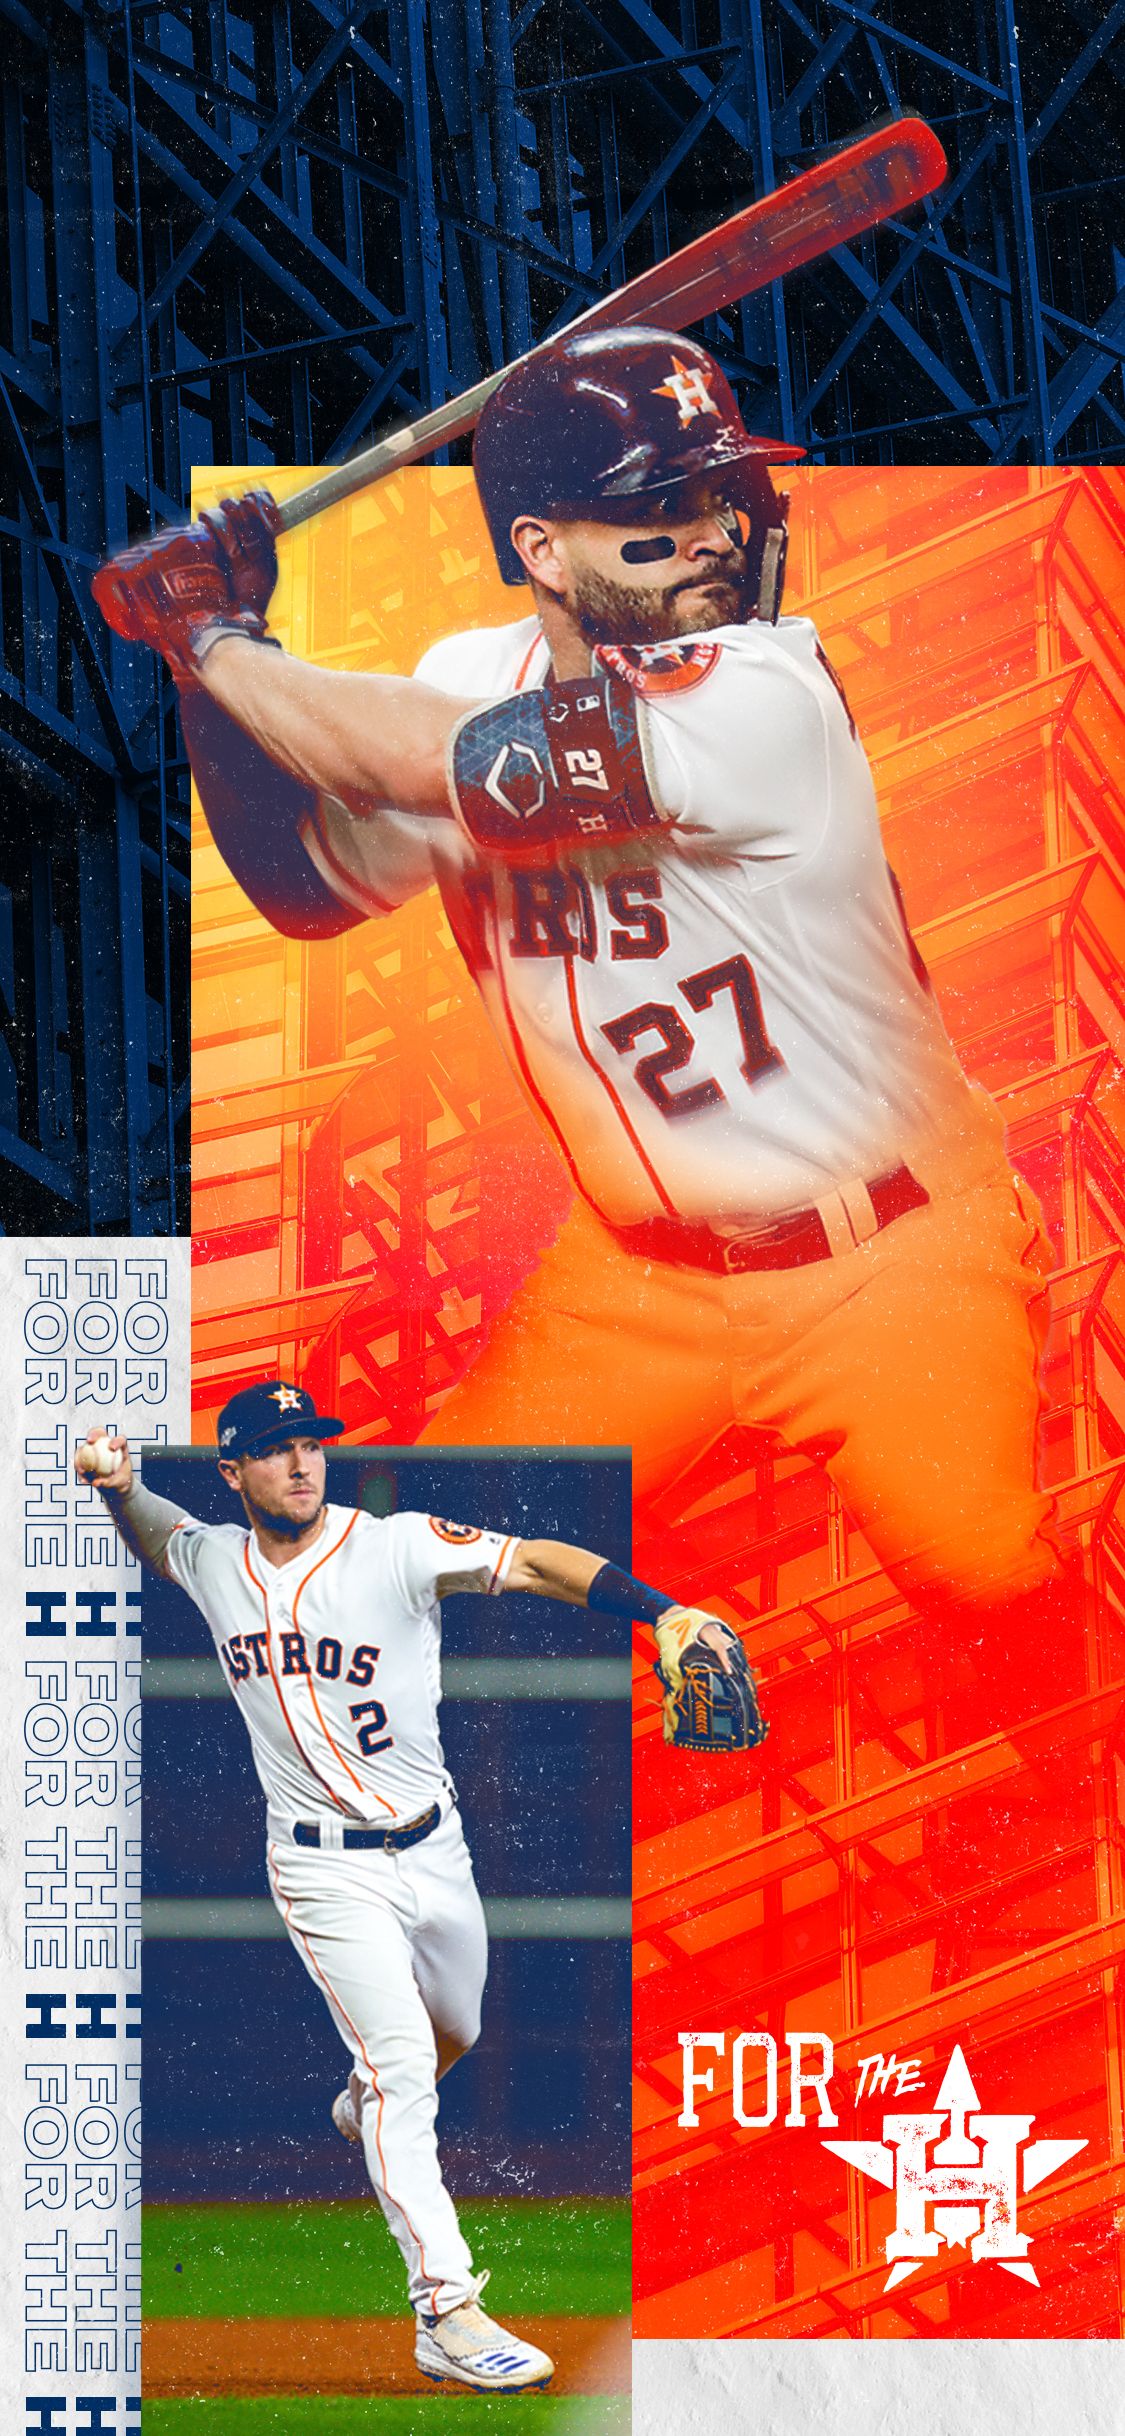 Astros Wallpaper - iXpap  Mlb wallpaper, Houston astros, Astros baseball